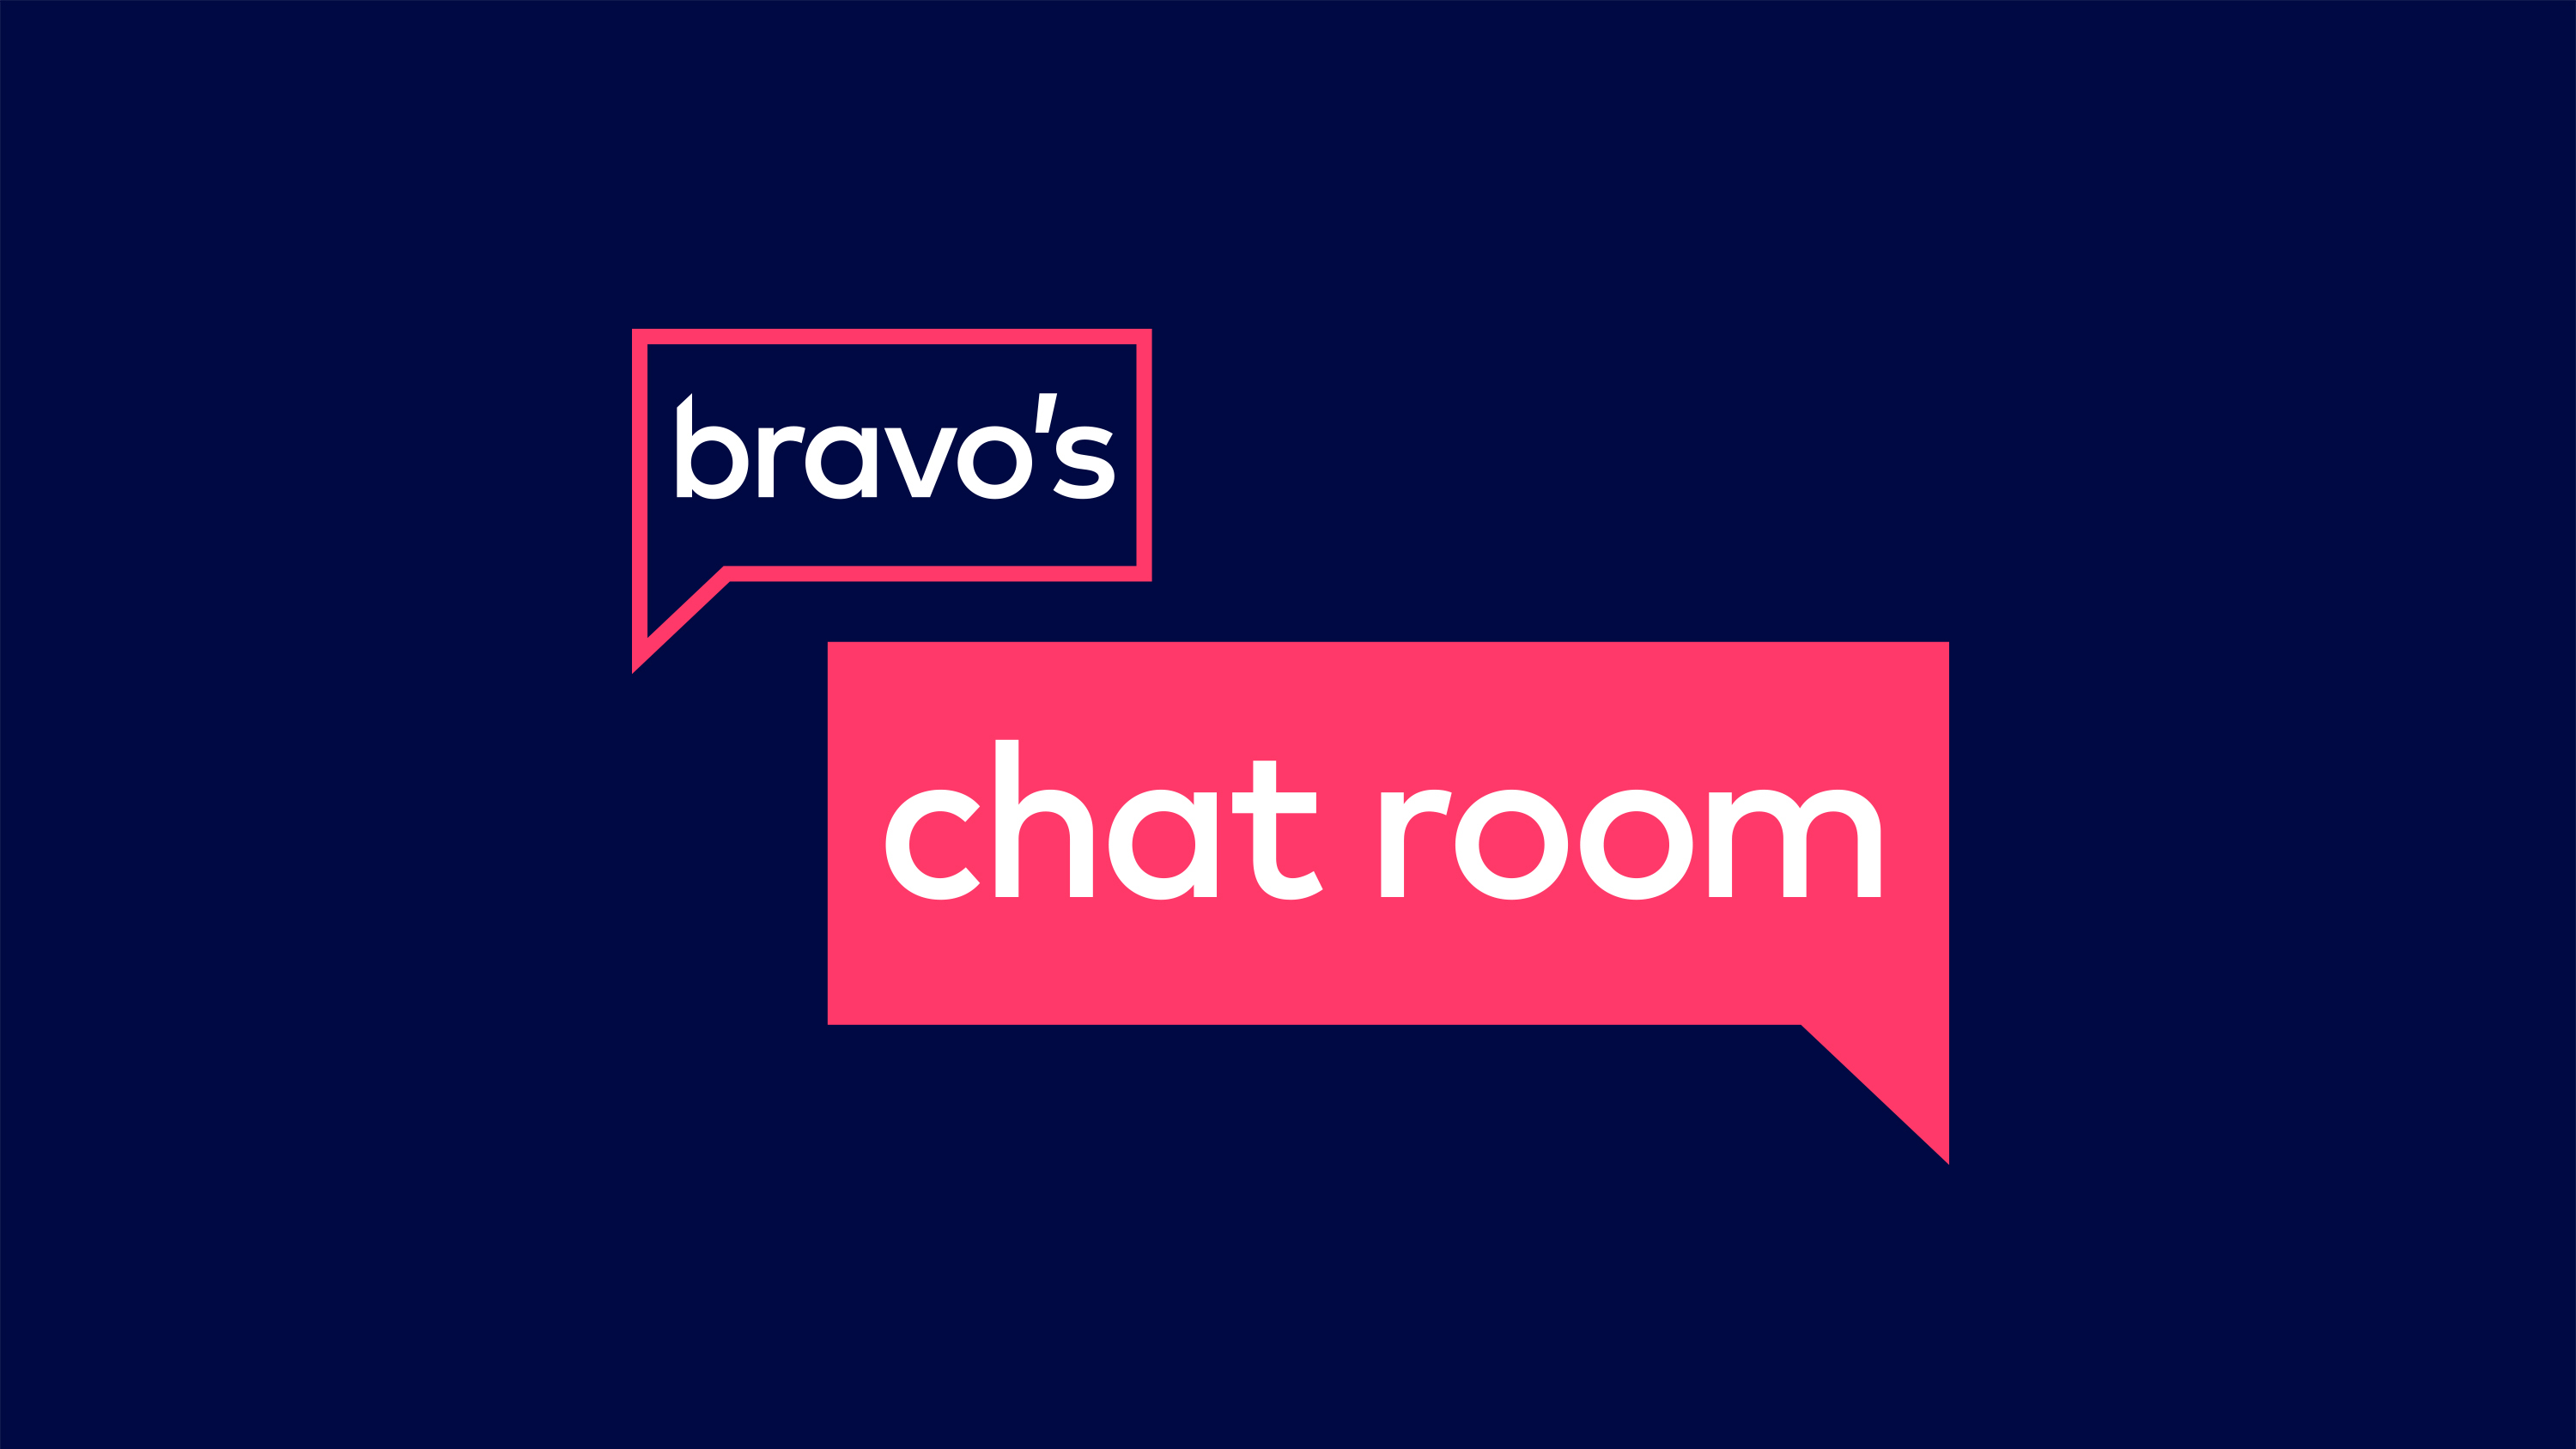 Bravo's Chat Room logo